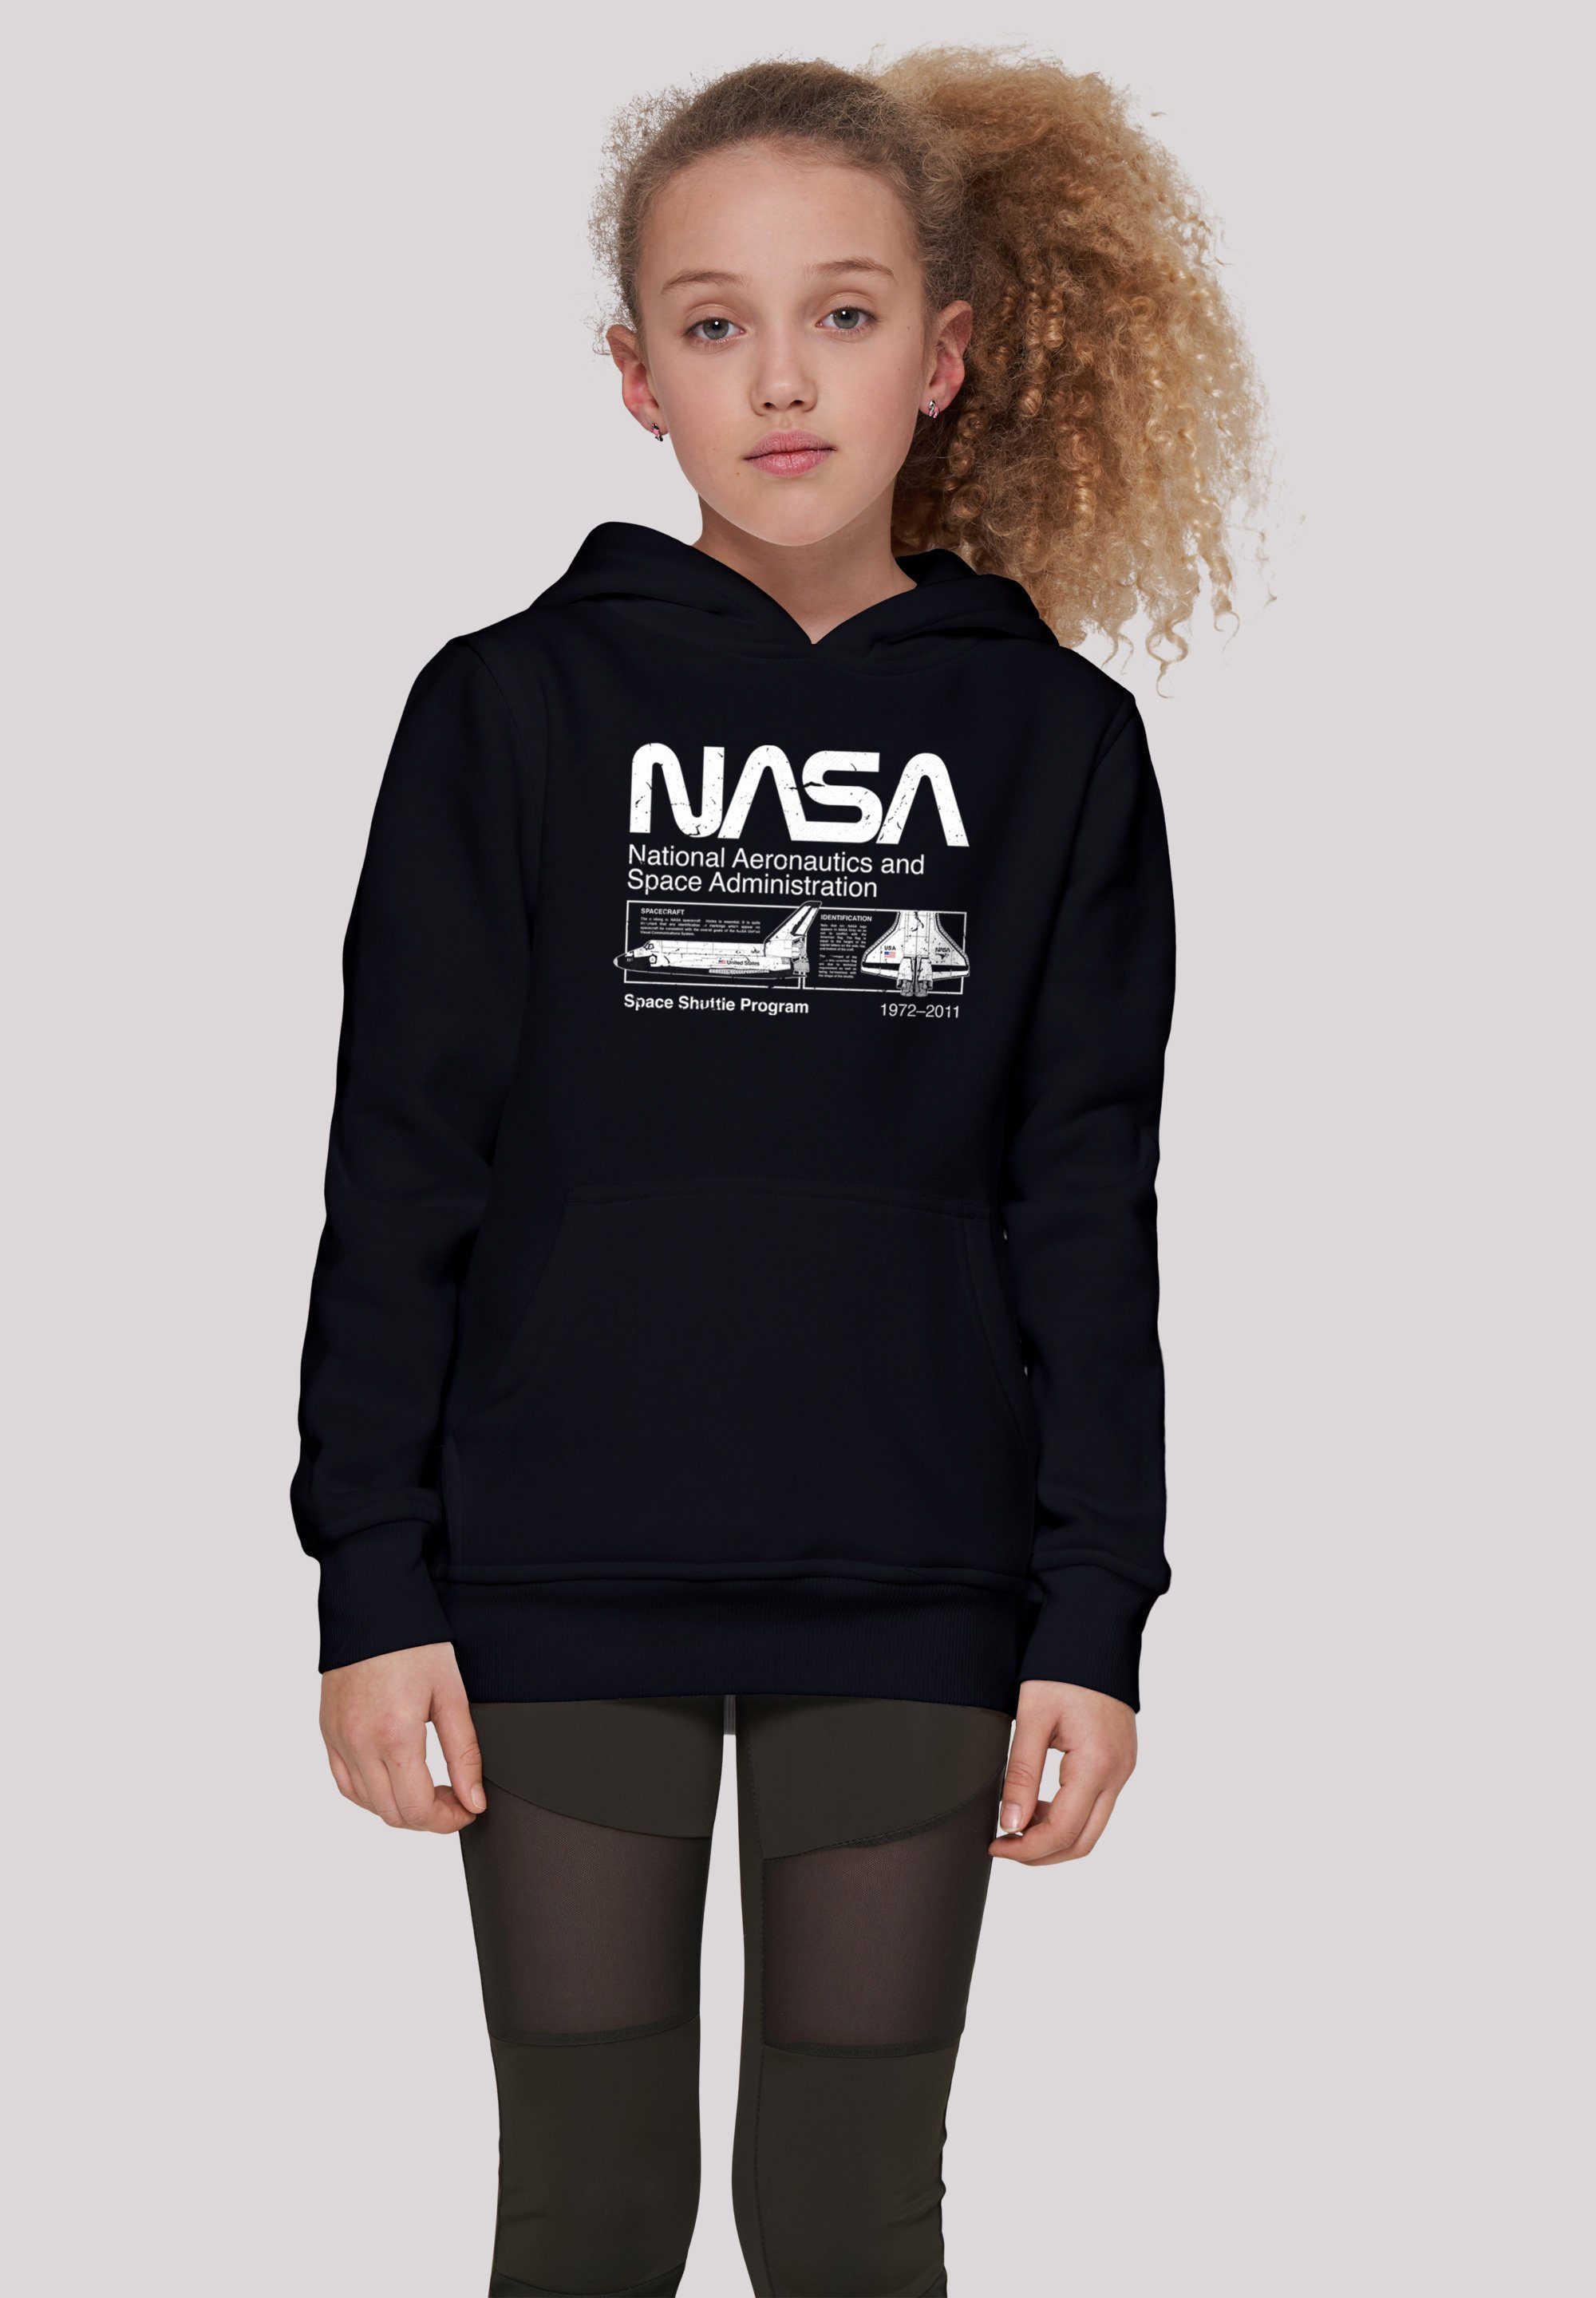 F4NT4STIC Sweatshirt NASA Classic Space Shuttle Black Unisex Kinder,Premium Merch,Jungen,Mädchen,Bedruckt